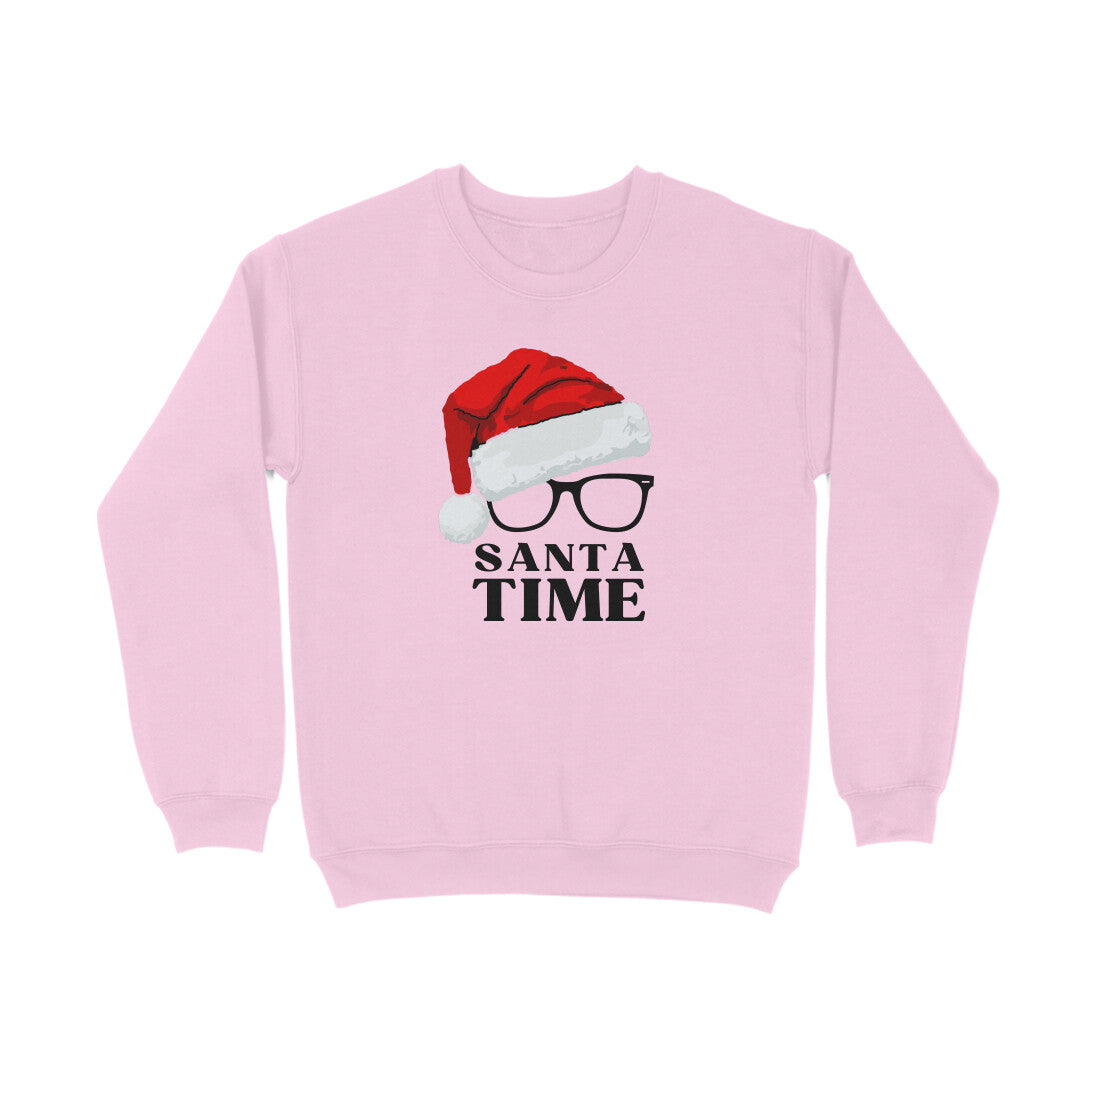 Santa Time - Unisex Light Pink Sweatshirt